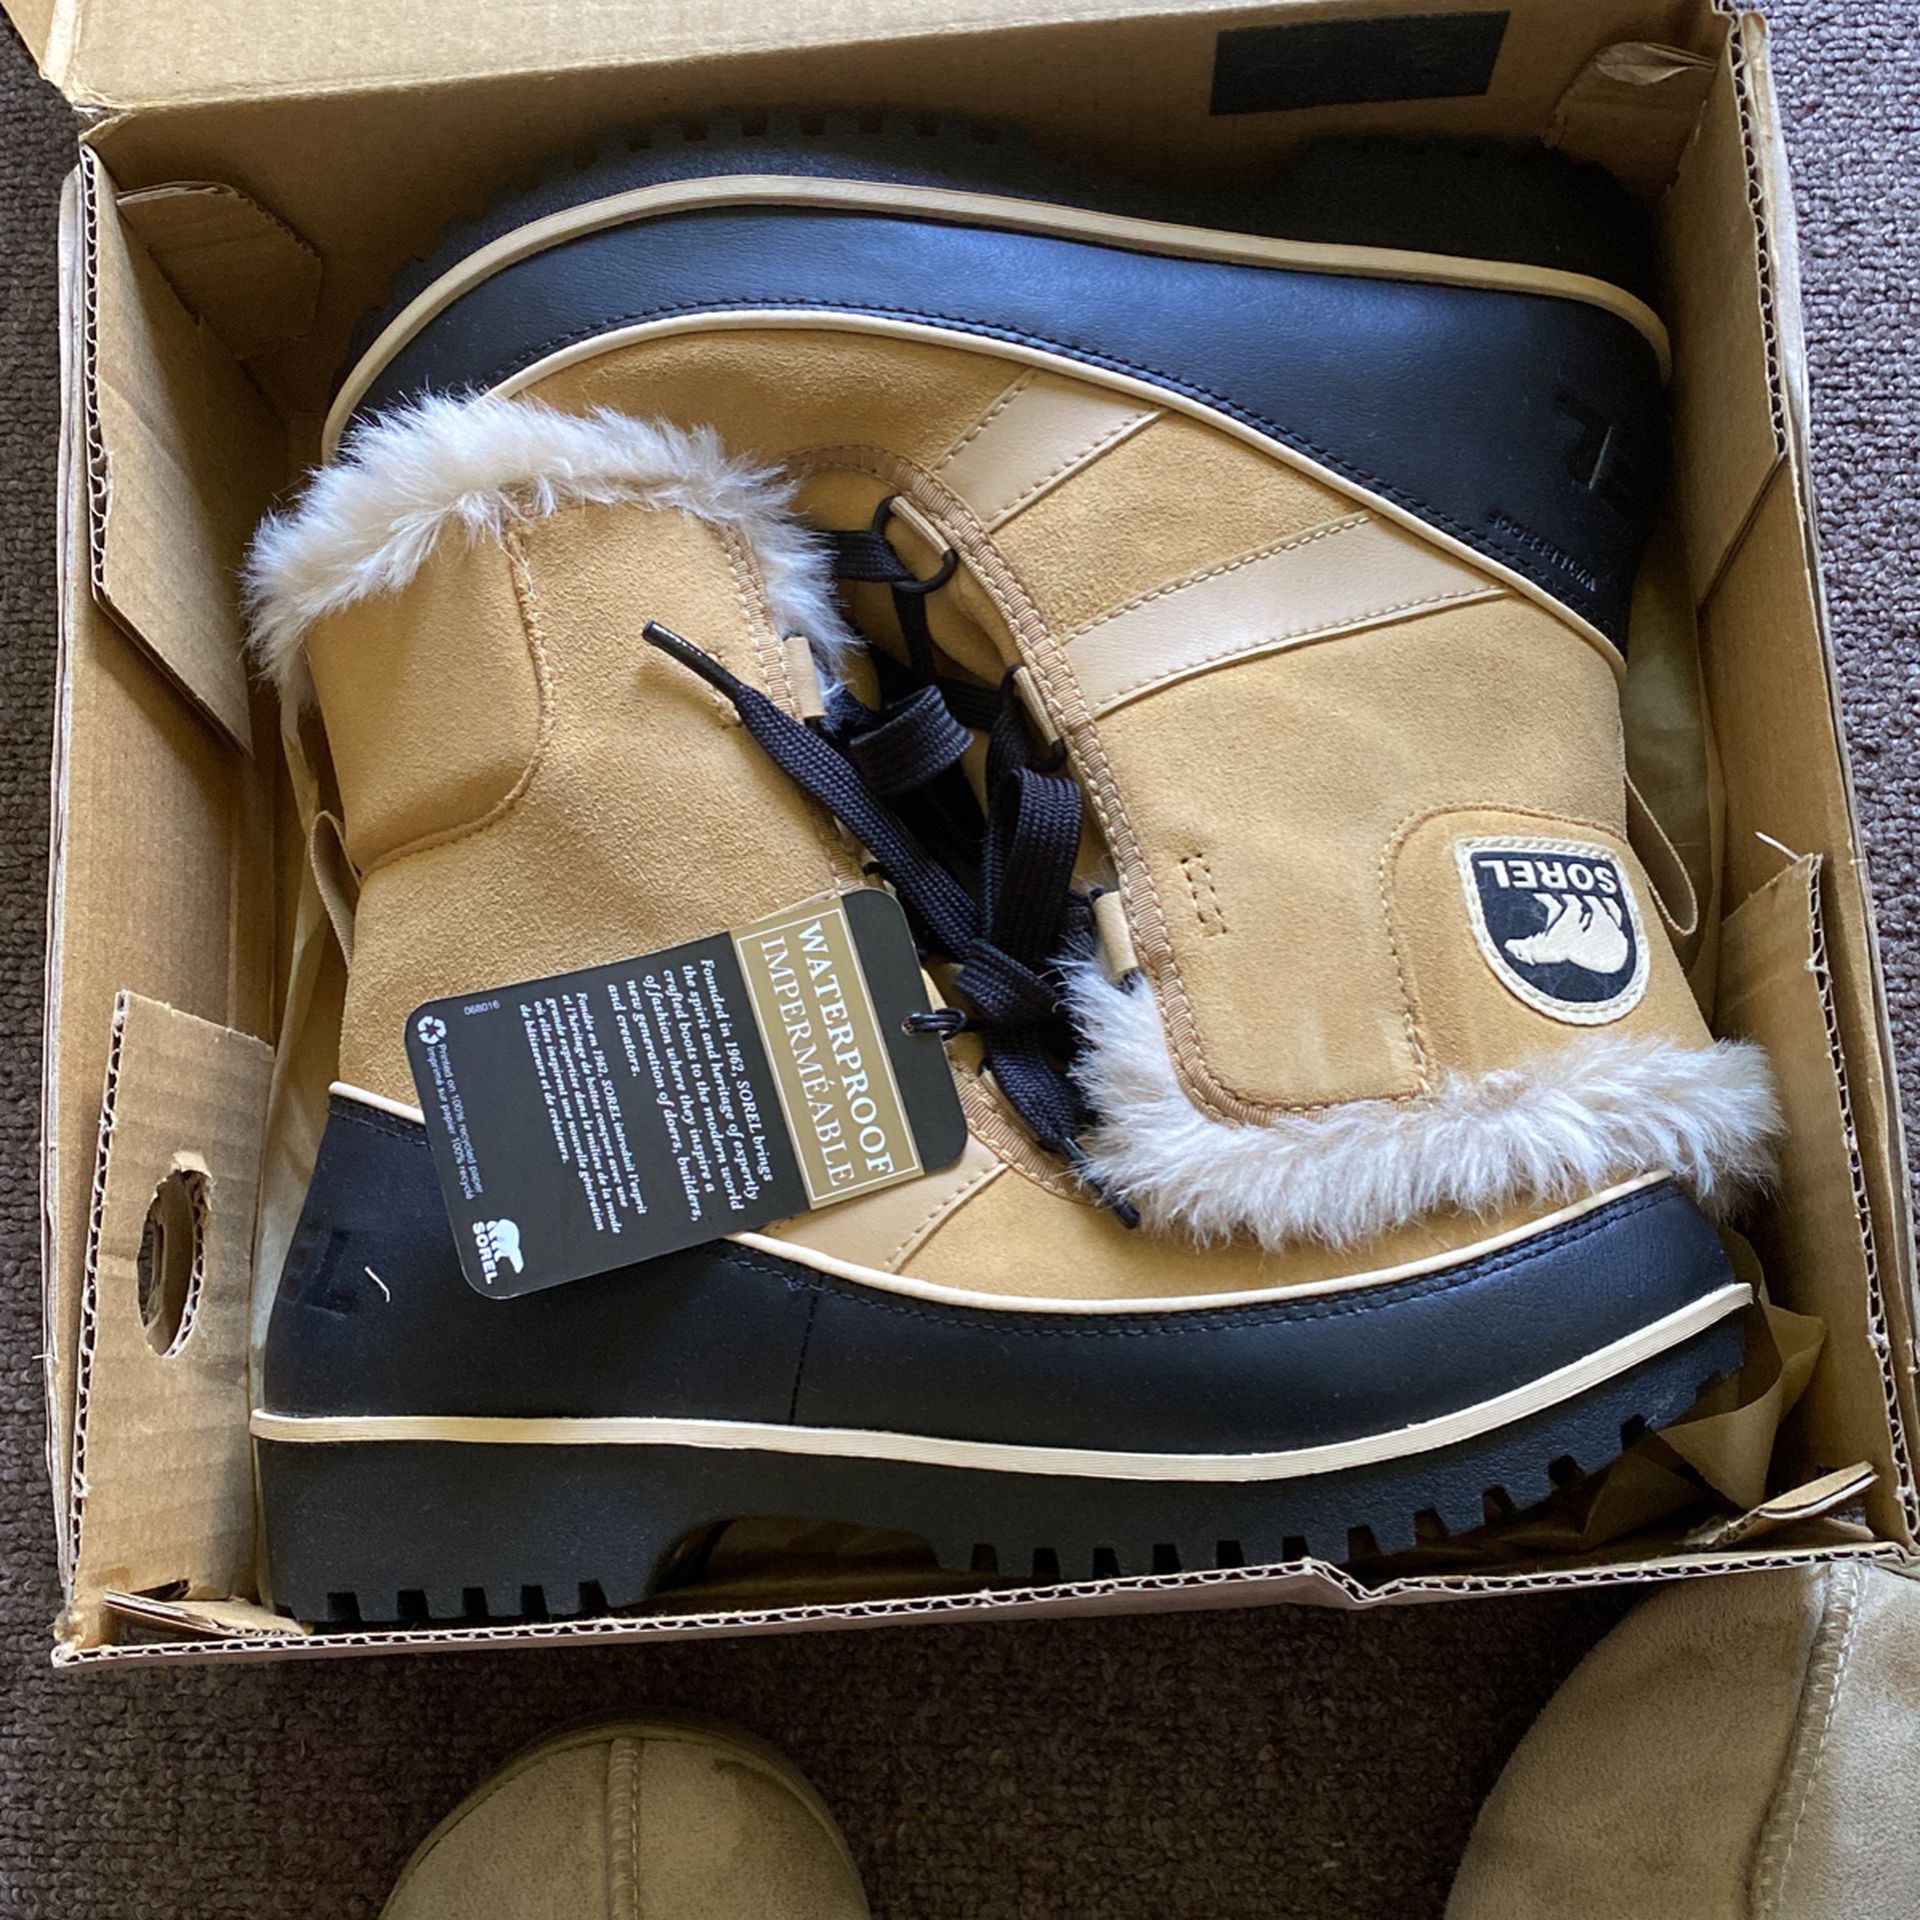 Sorel Brand New Snow Boots Size 7.5